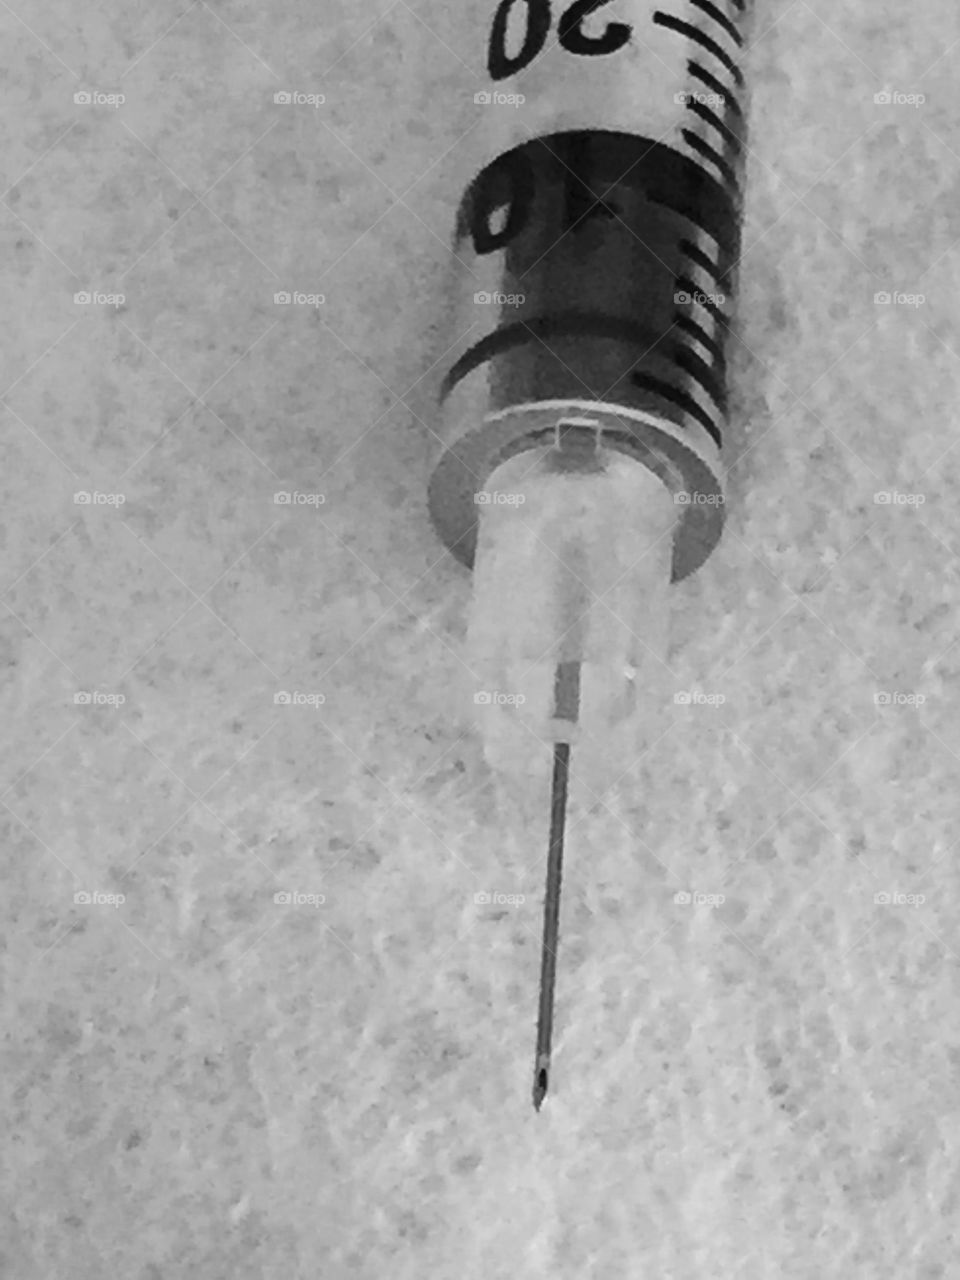 Insulin needle tip.